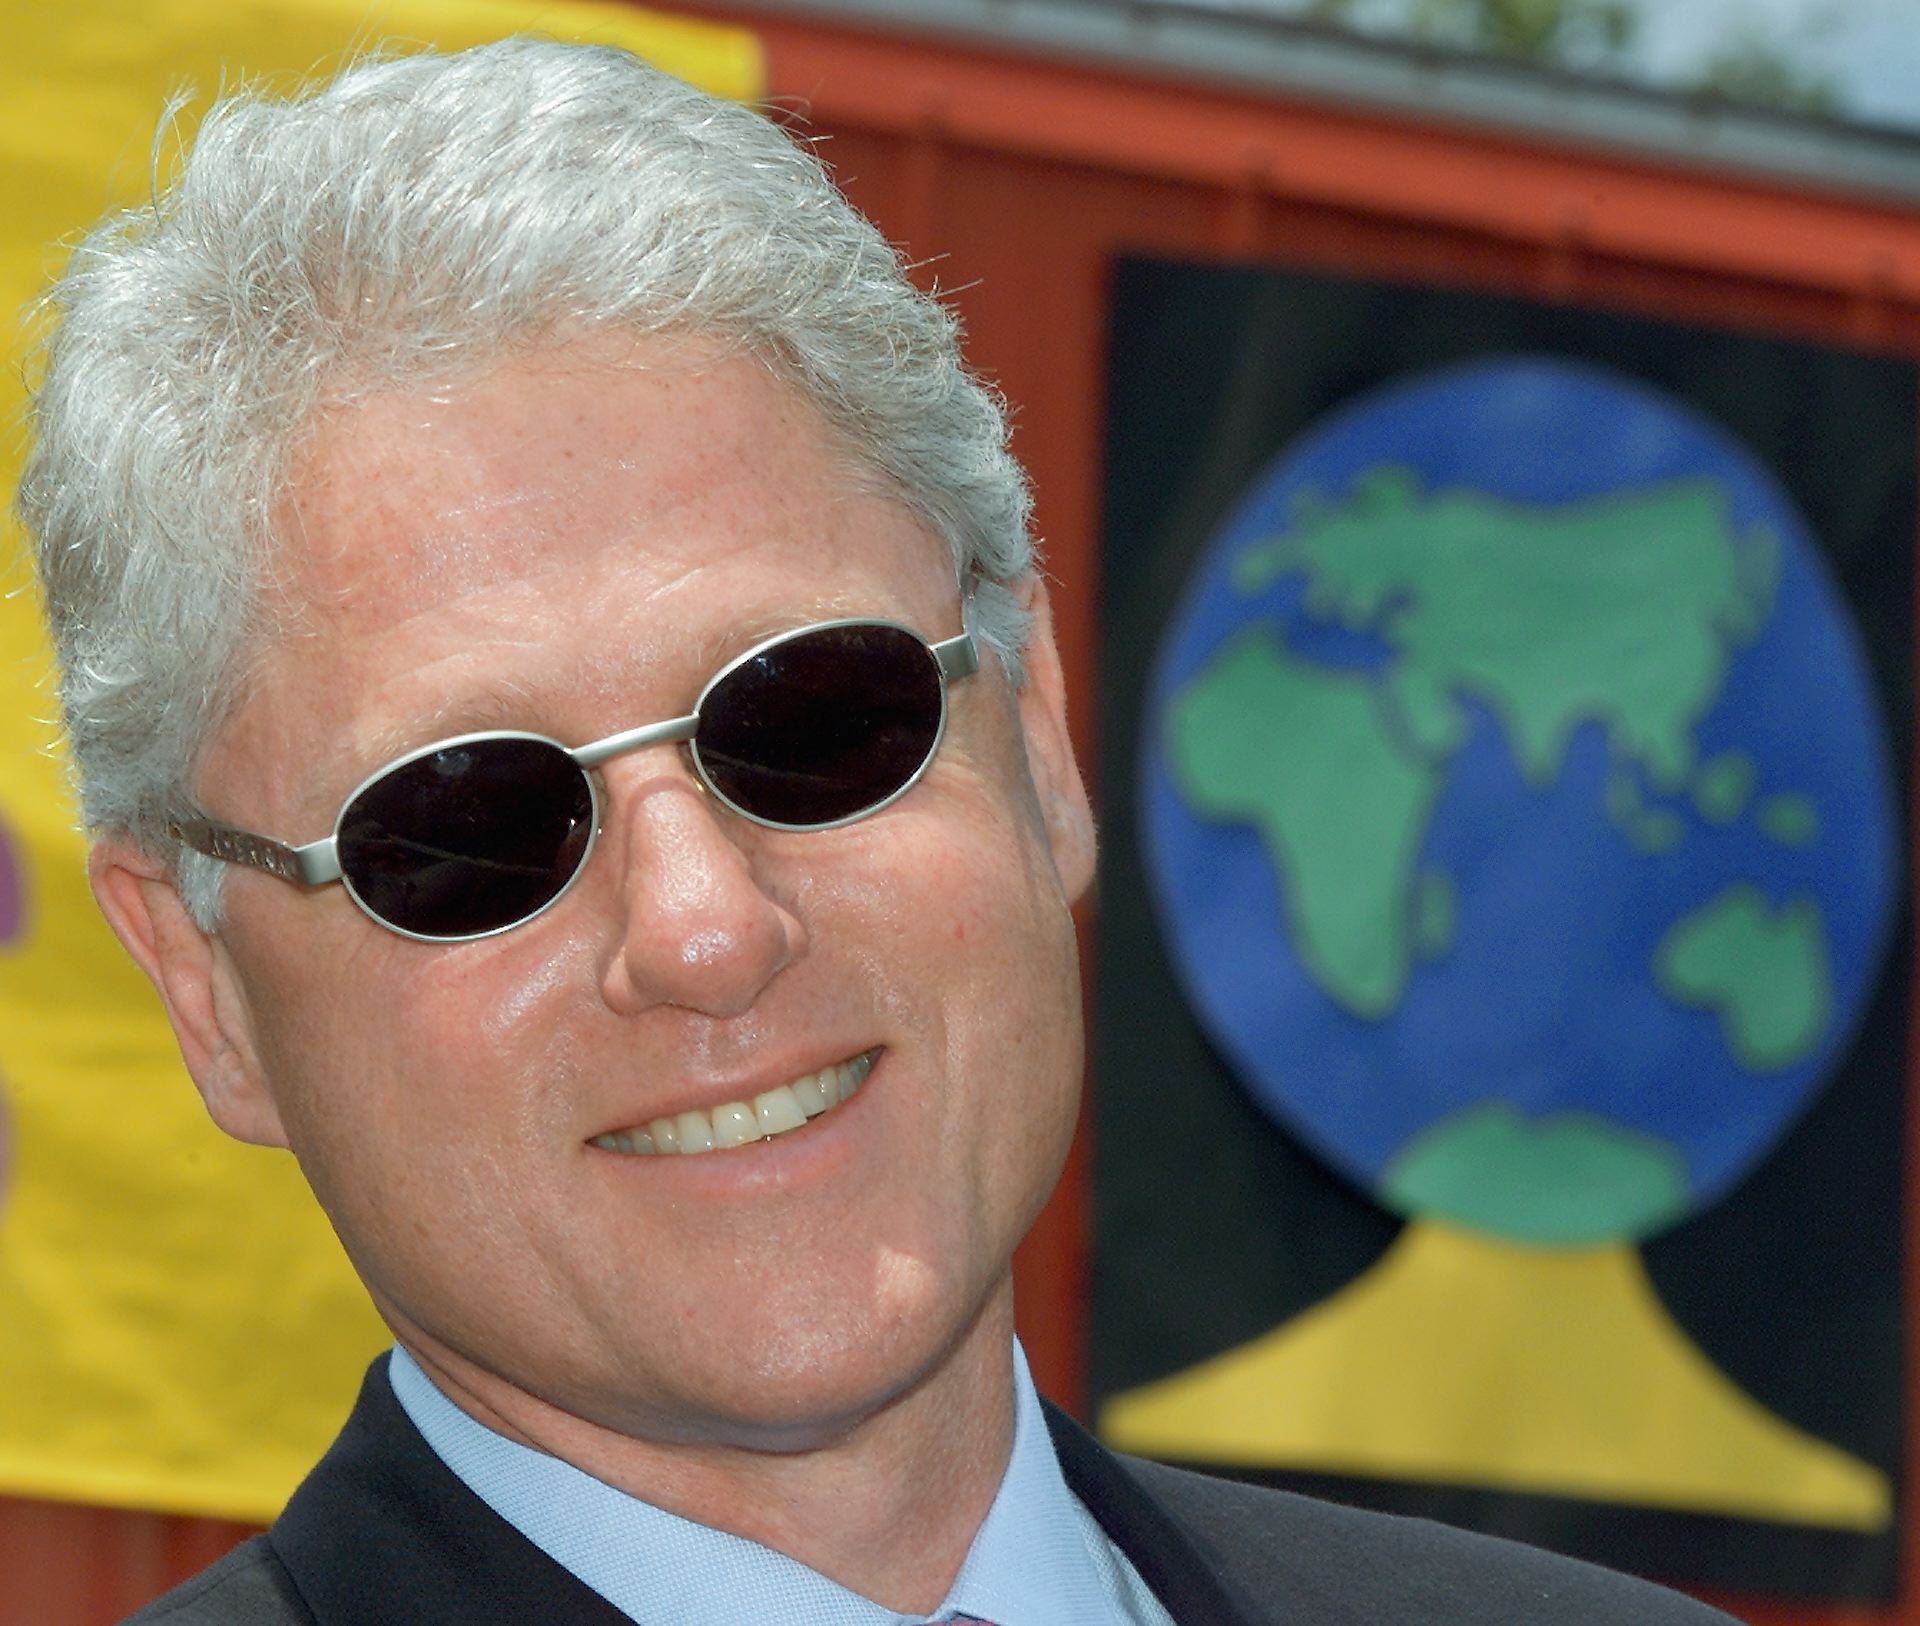 Bill Clinton Getty Images/Paul J. Richards